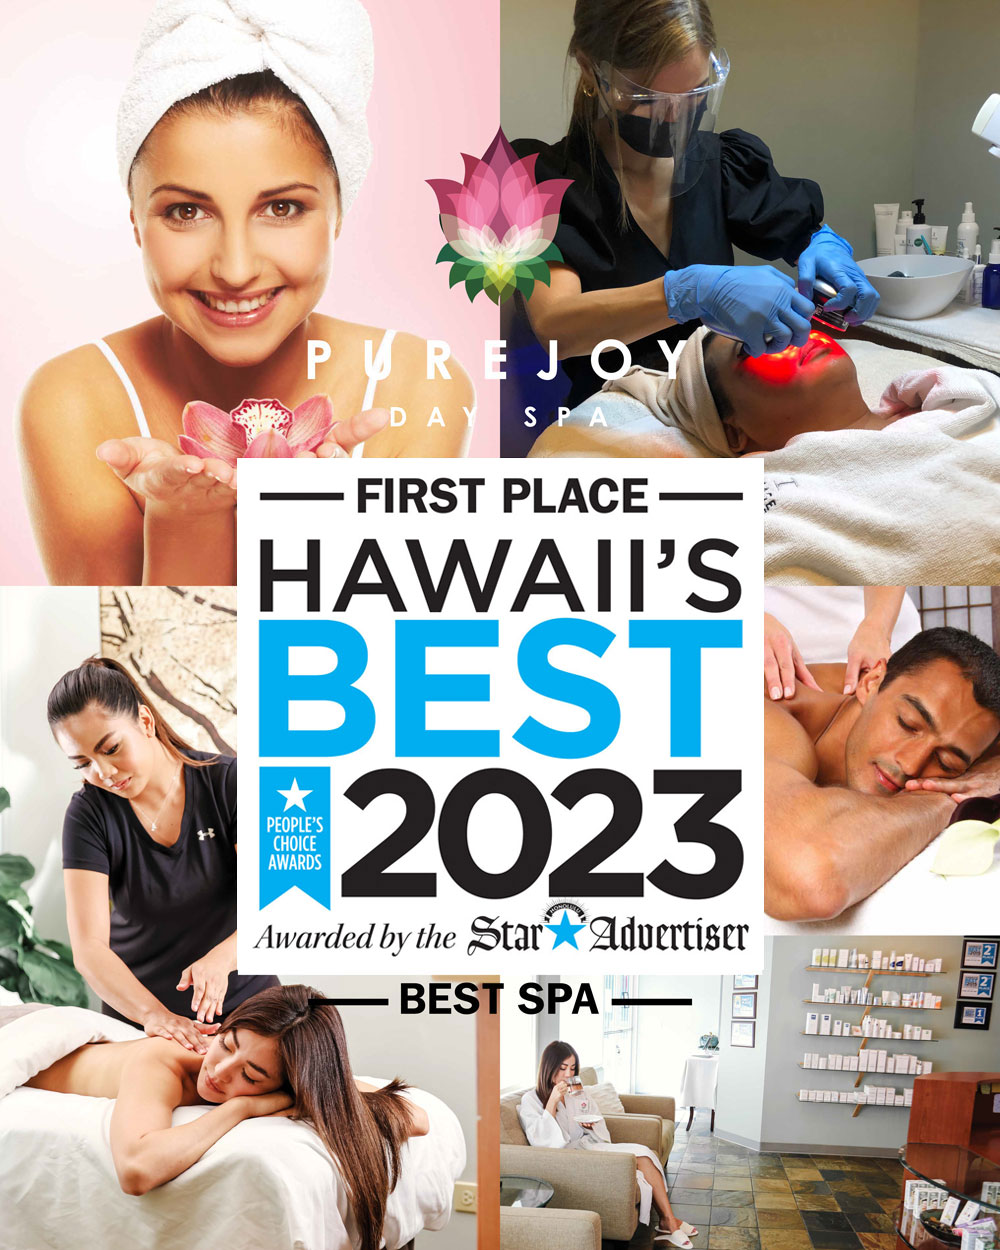 Pure Joy Day Spa Winner of Hawaiiʻs Best Spa 2023, peopleʻs choice award from the Honolulu Star Advertiser